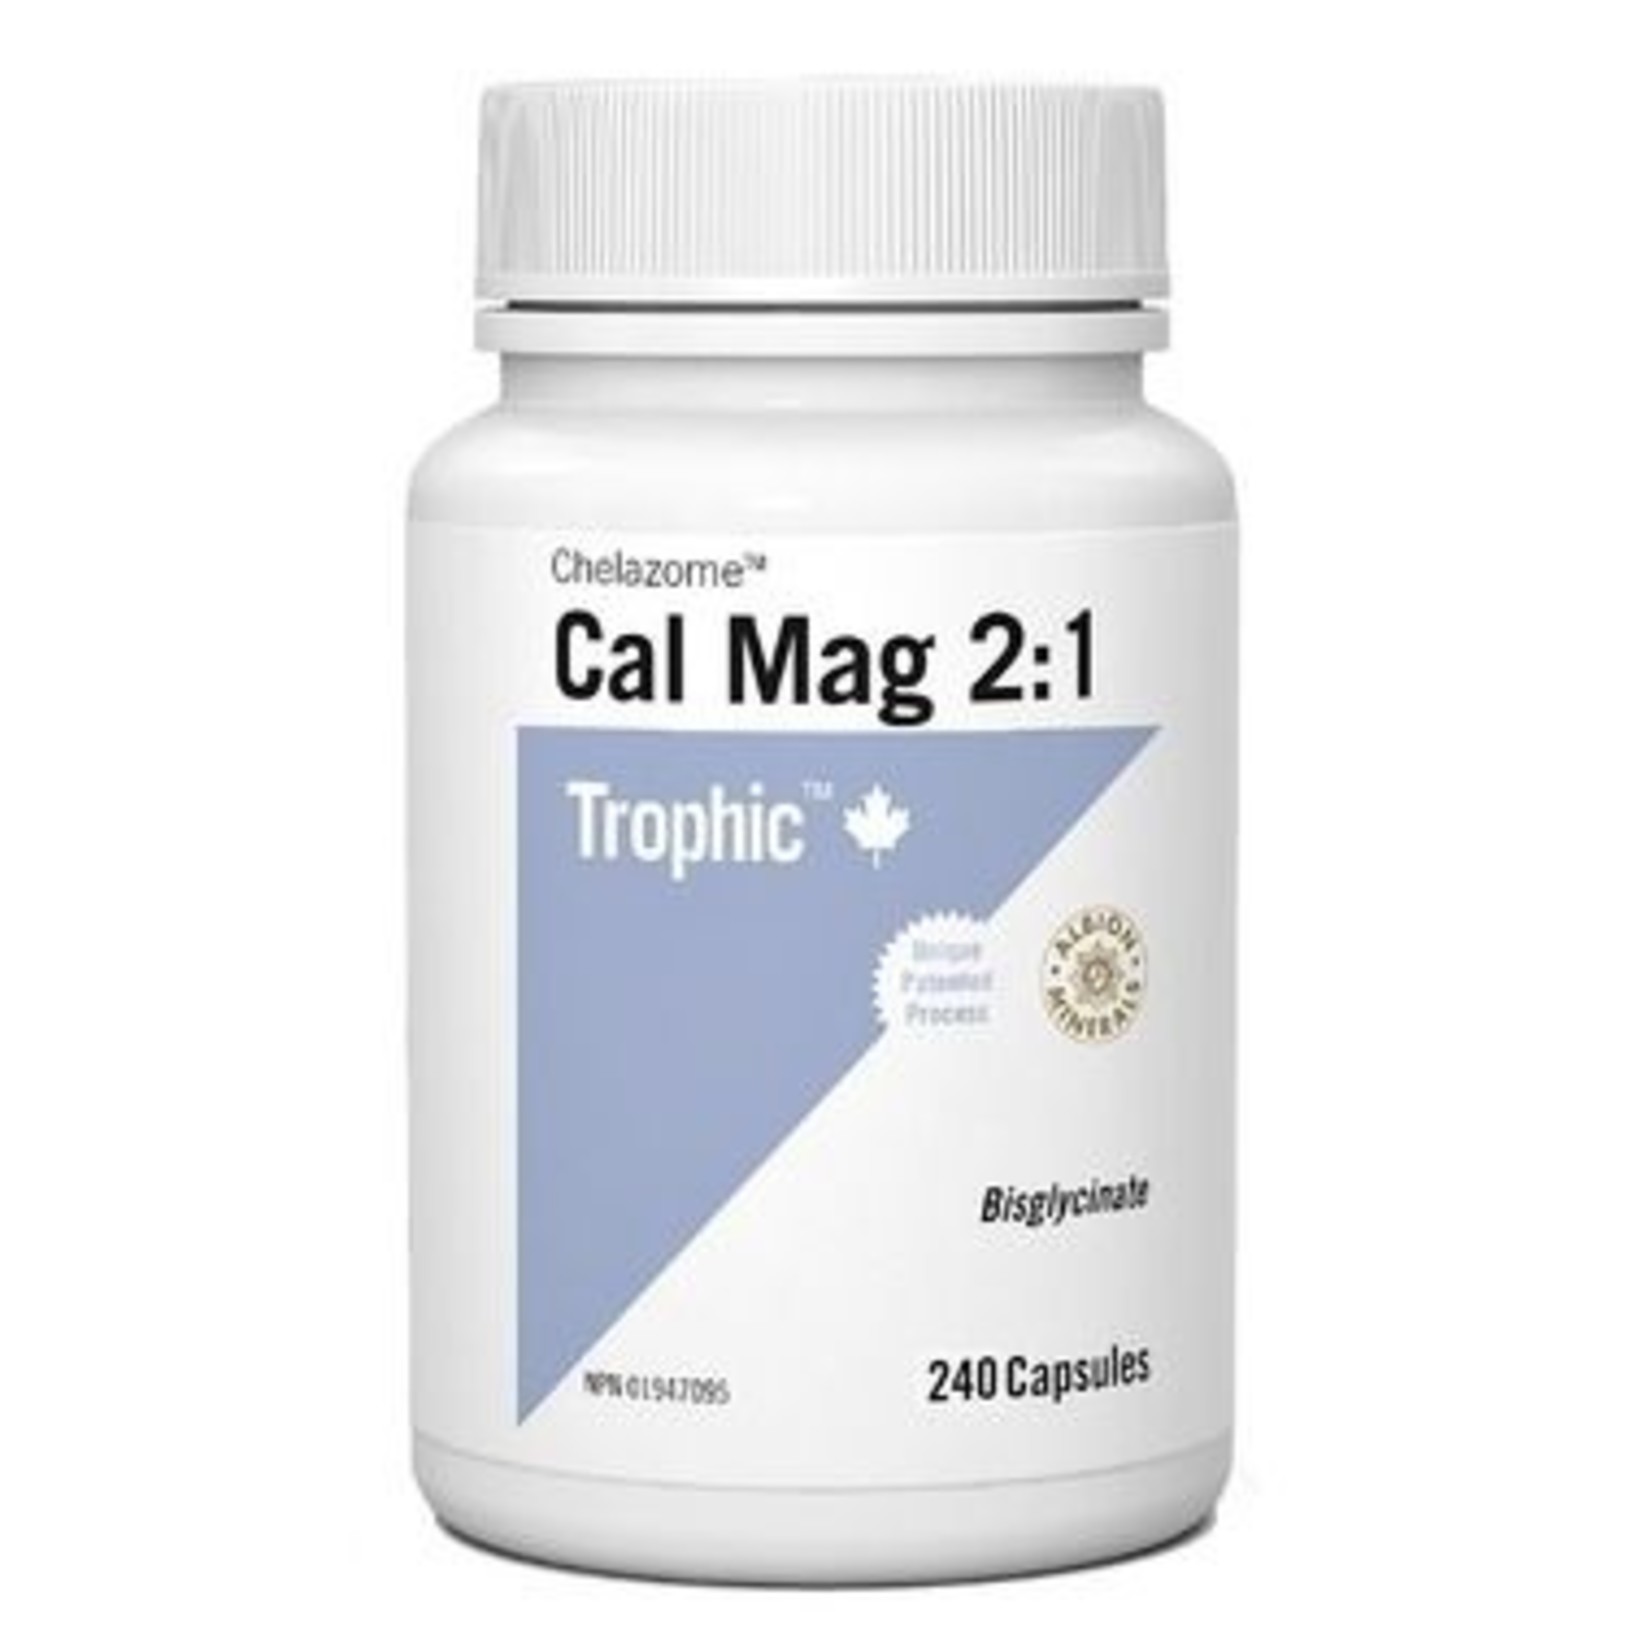 TROPHIC TROPHIC CAL MAG 2:1 CHELAZOME 240 CAPS